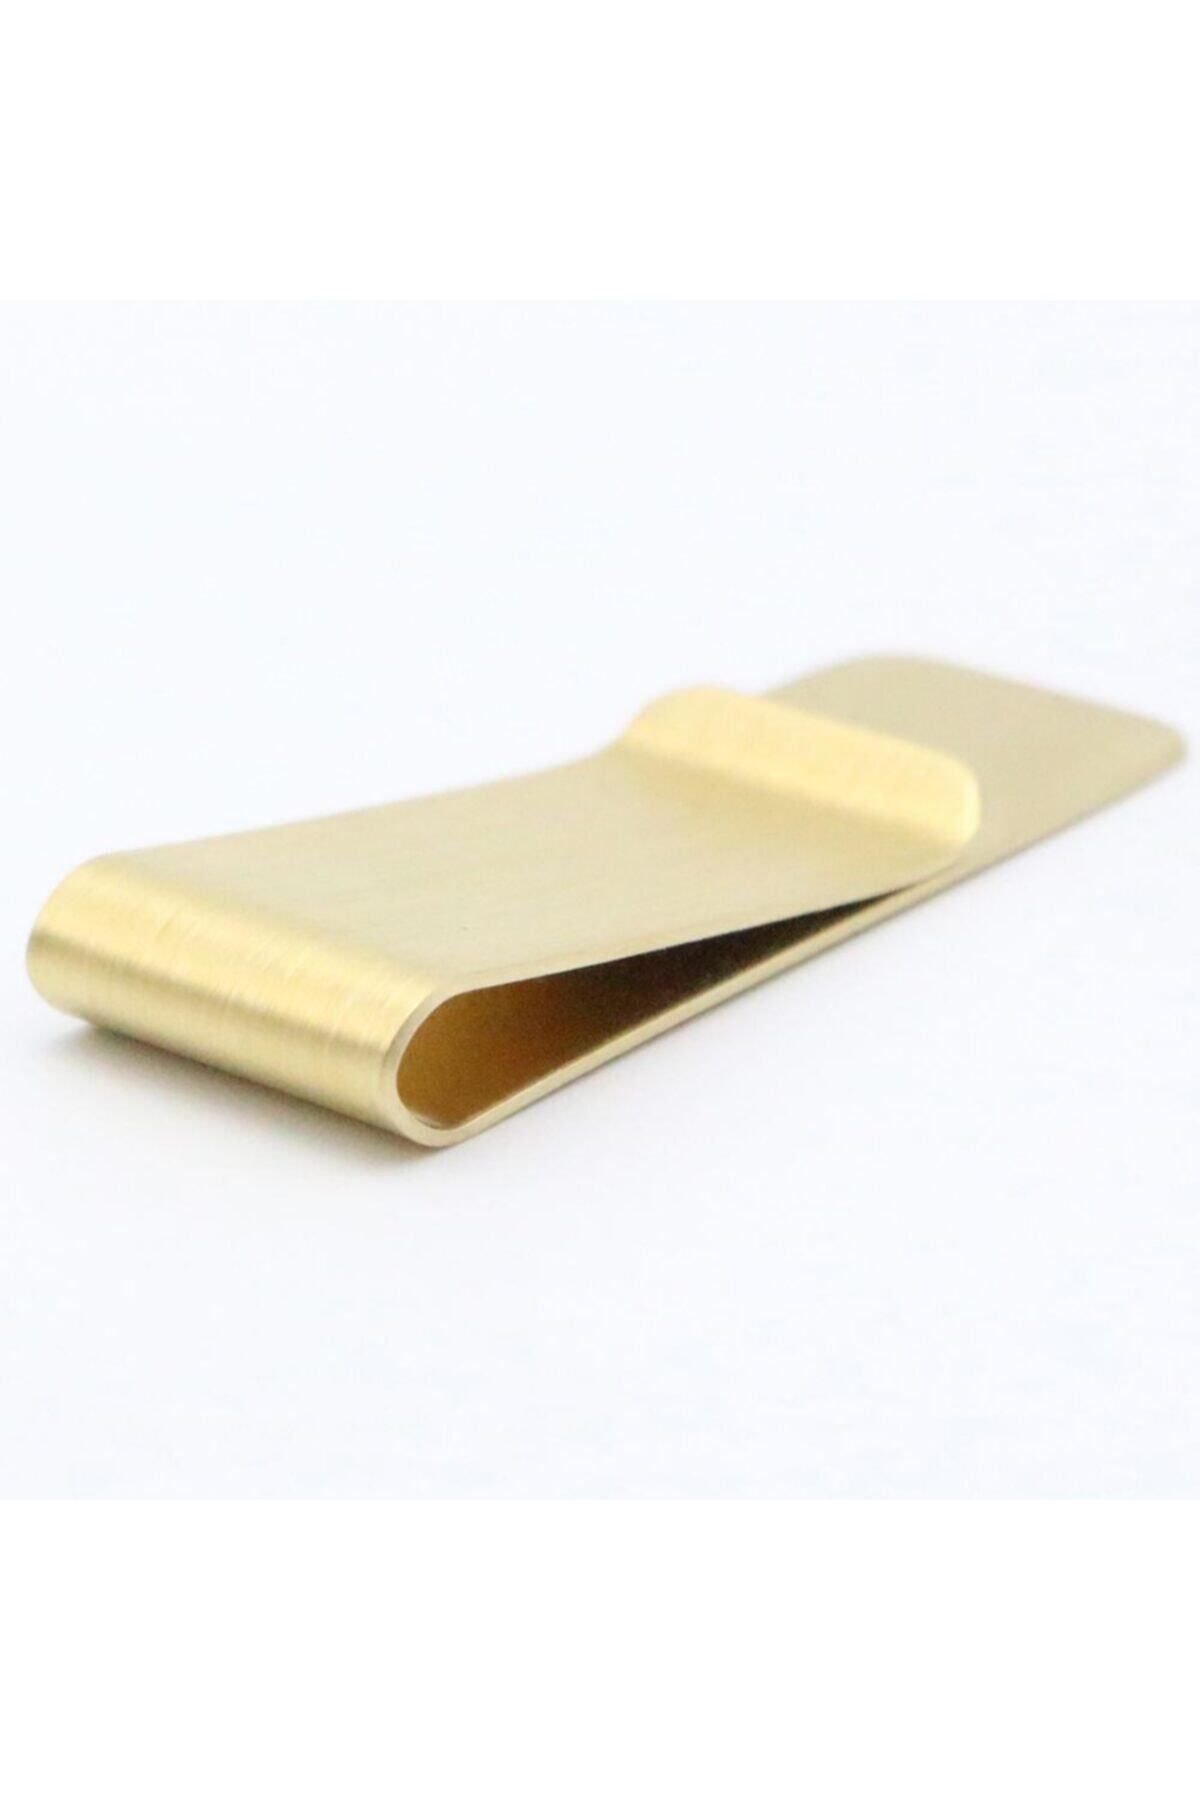 Spelt Metal Kağıt Para Tokası Kart Tutucu Klips Cüzdan Ataş Altın 5cm X 1,5cm